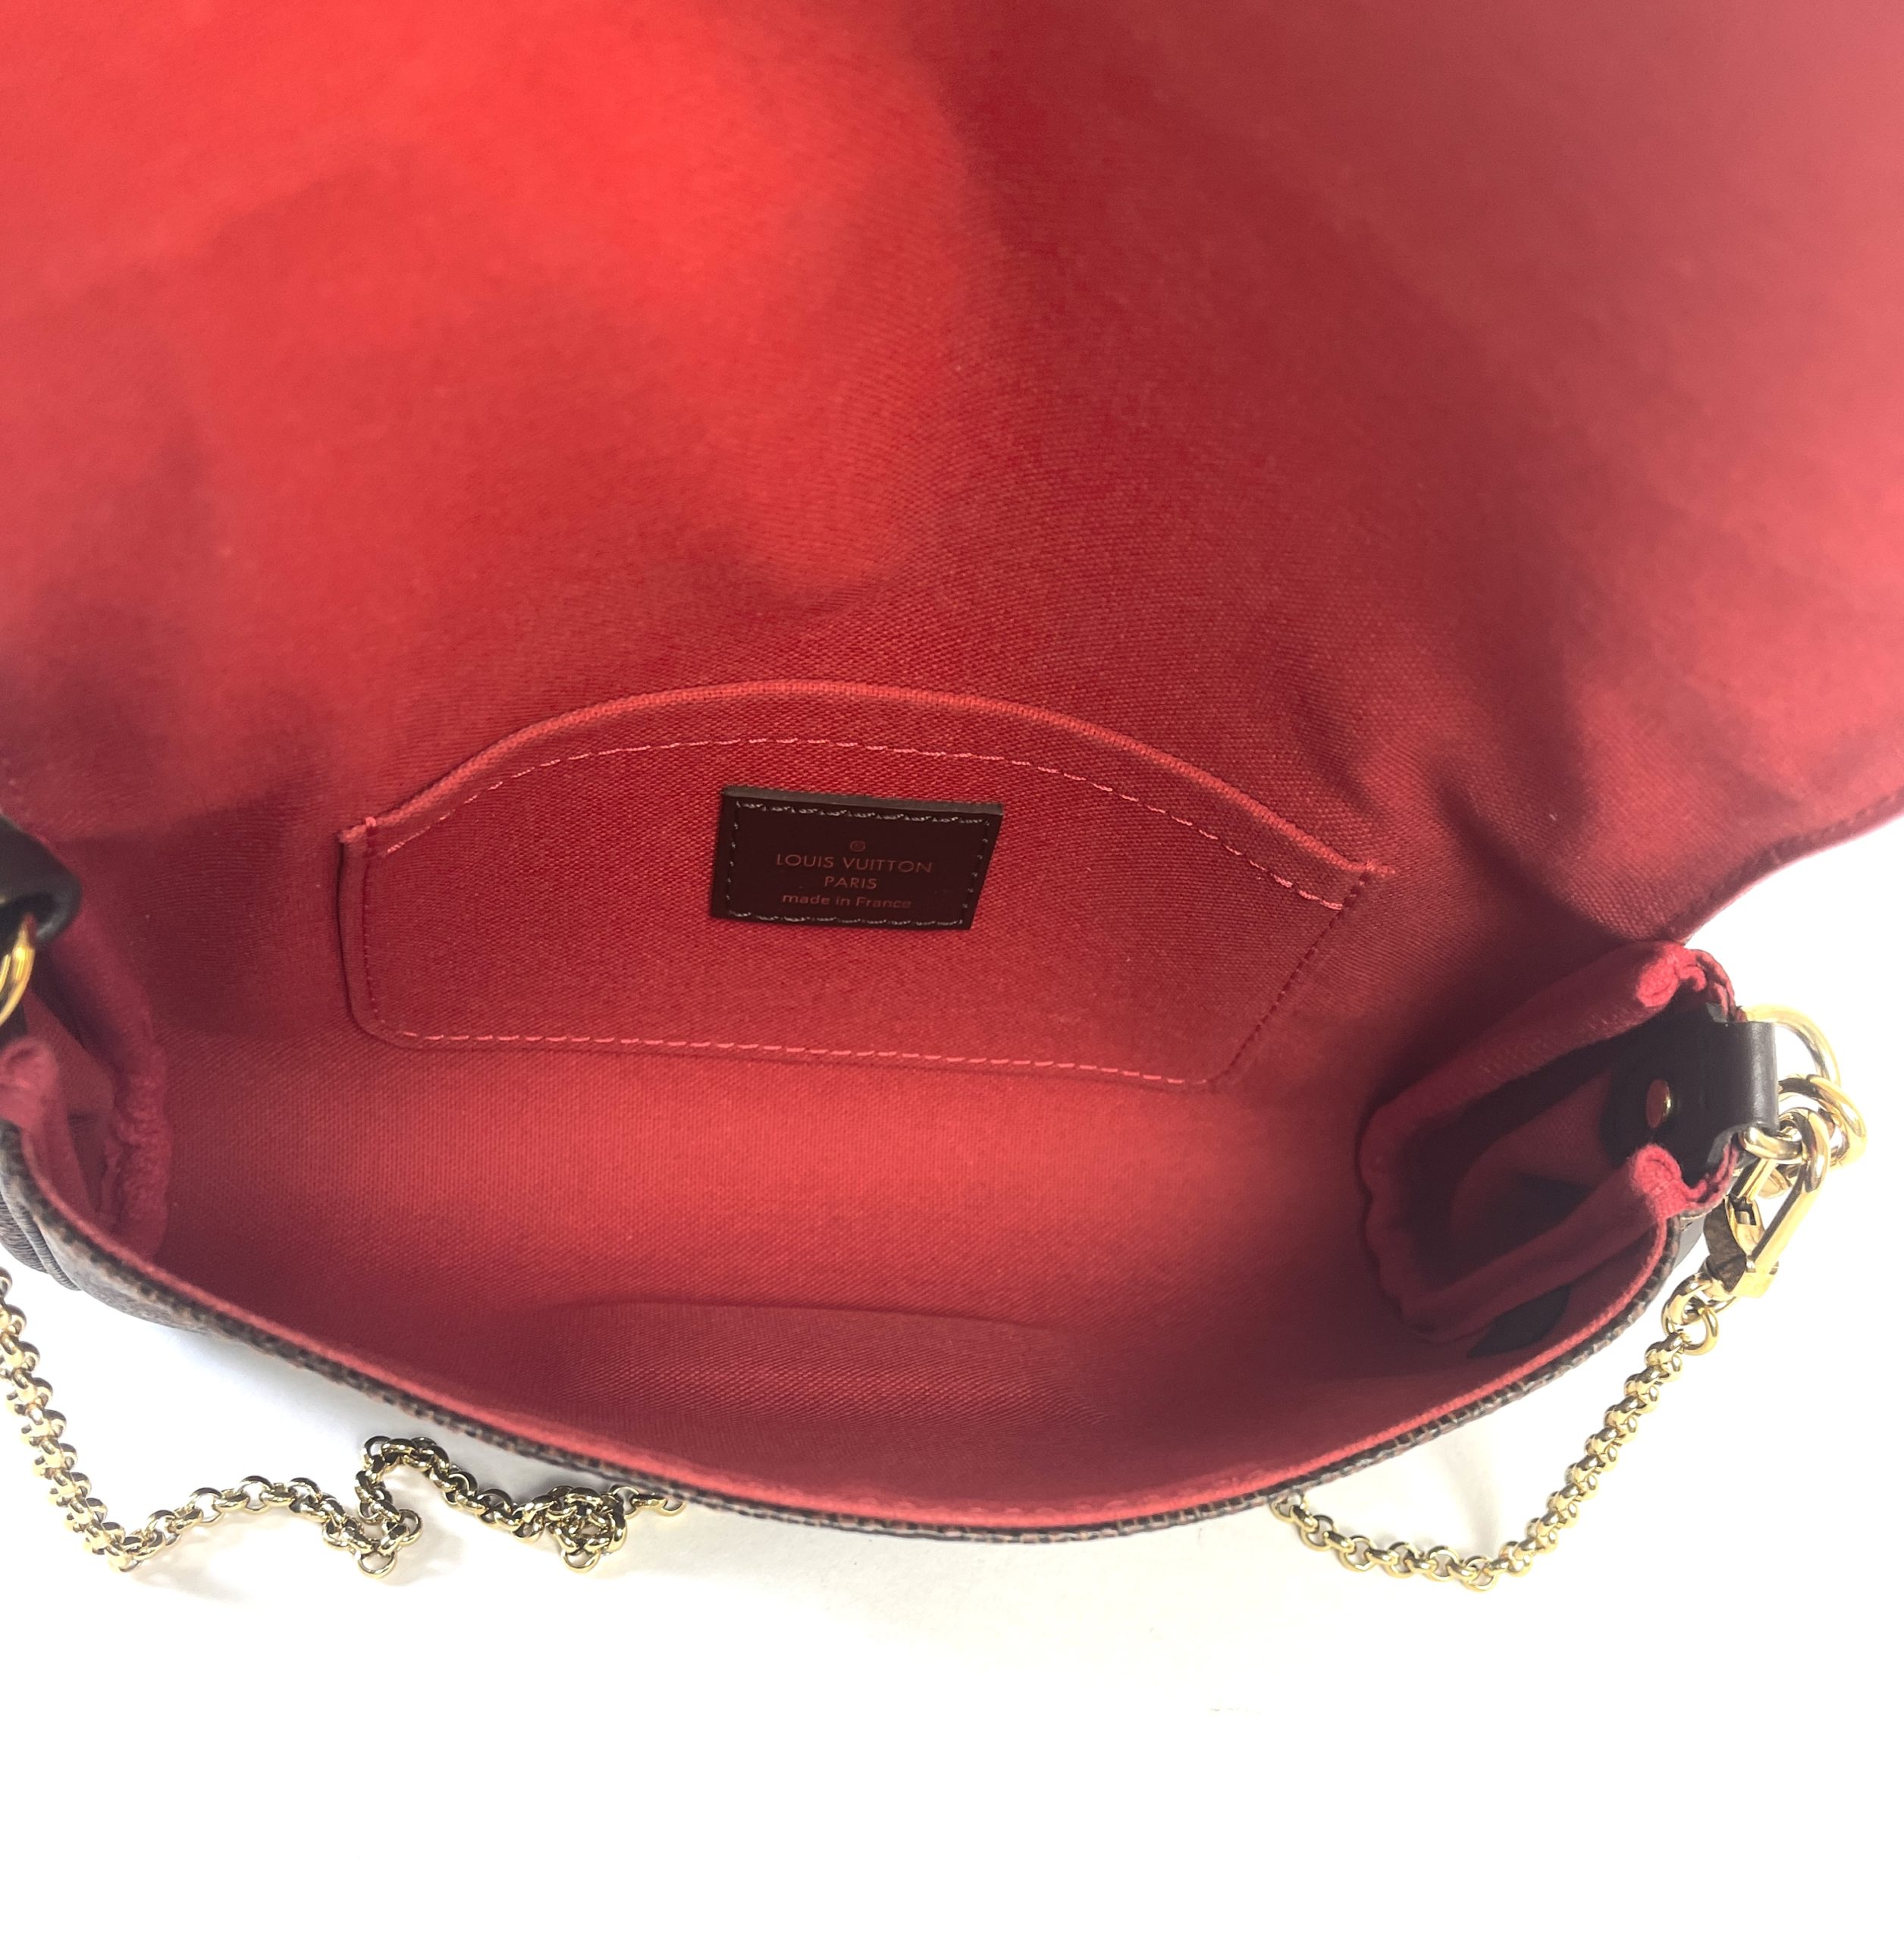 Louis Vuitton Favorite PM crossbody sidebag